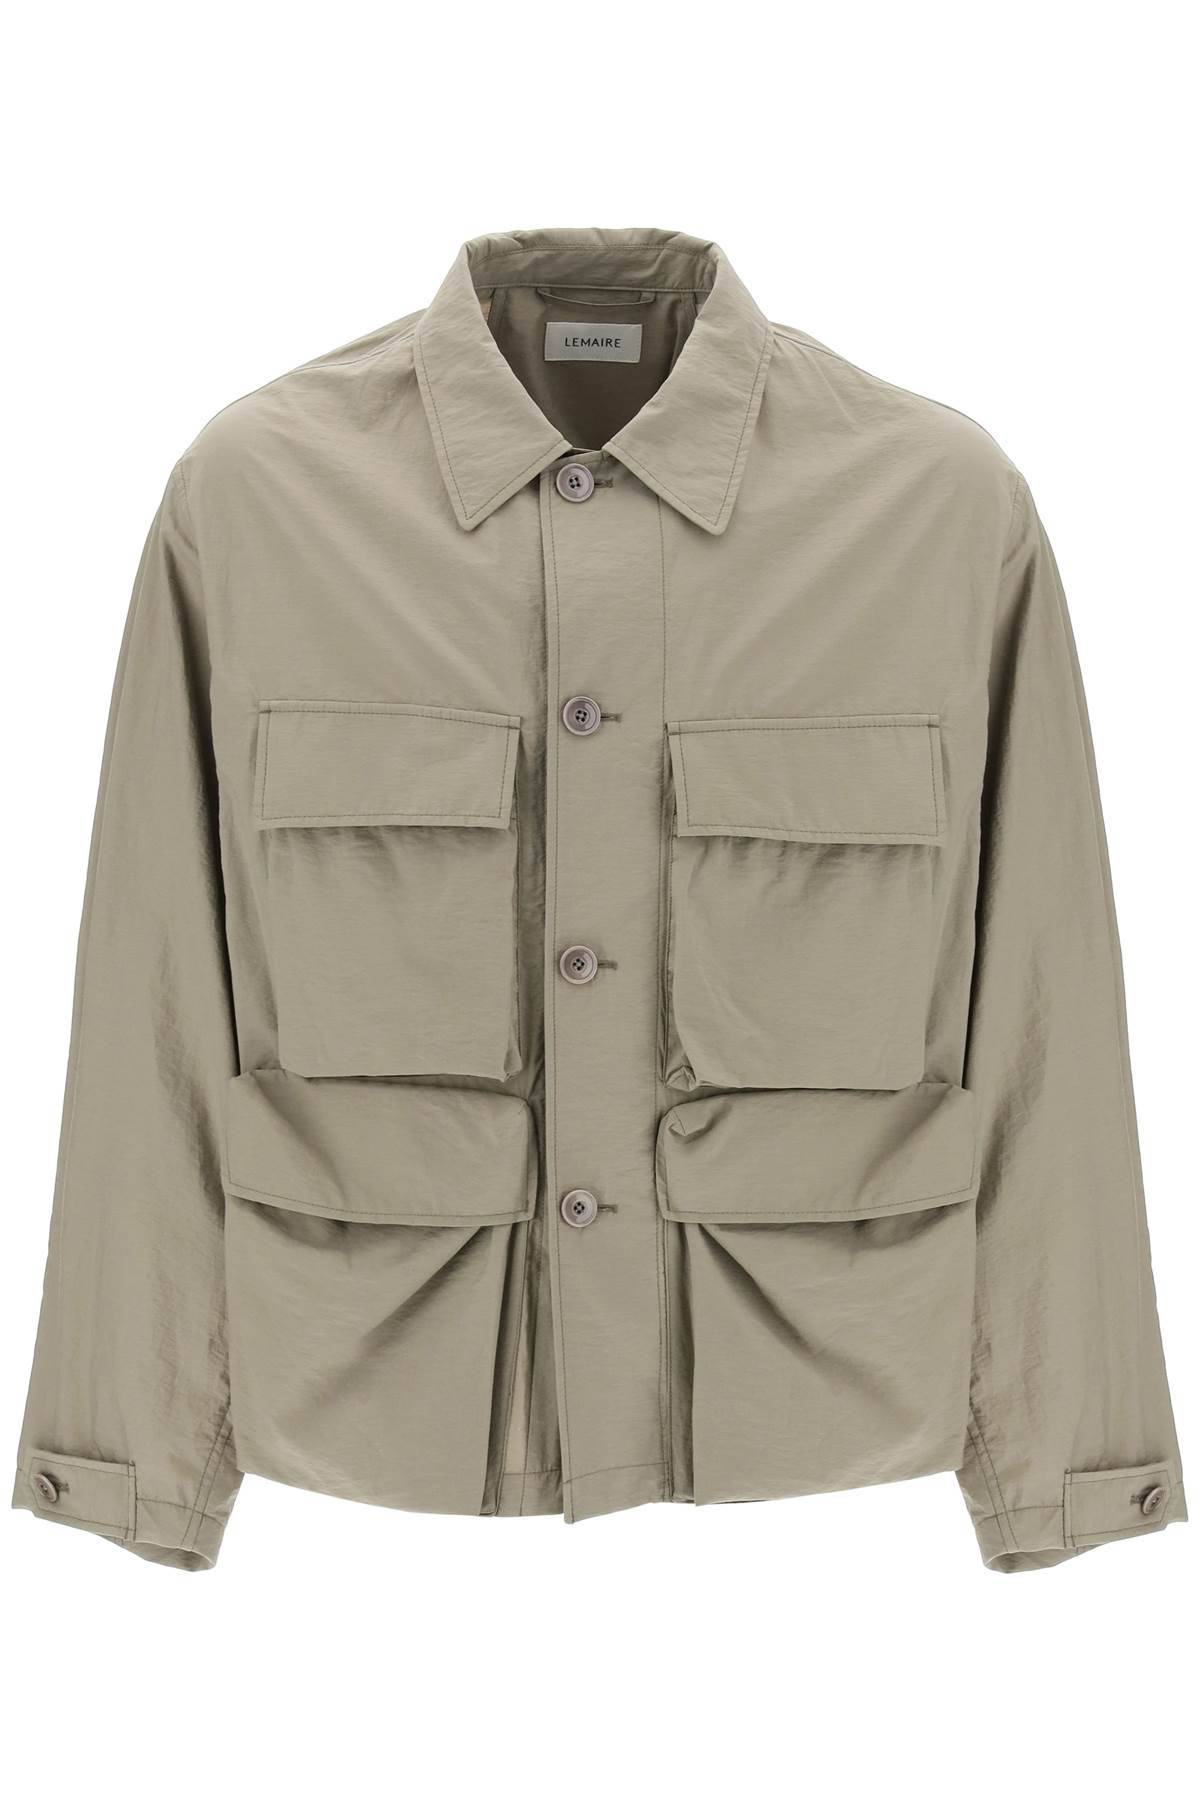 Lemaire LEMAIRE lightweight multi-pocket jacket